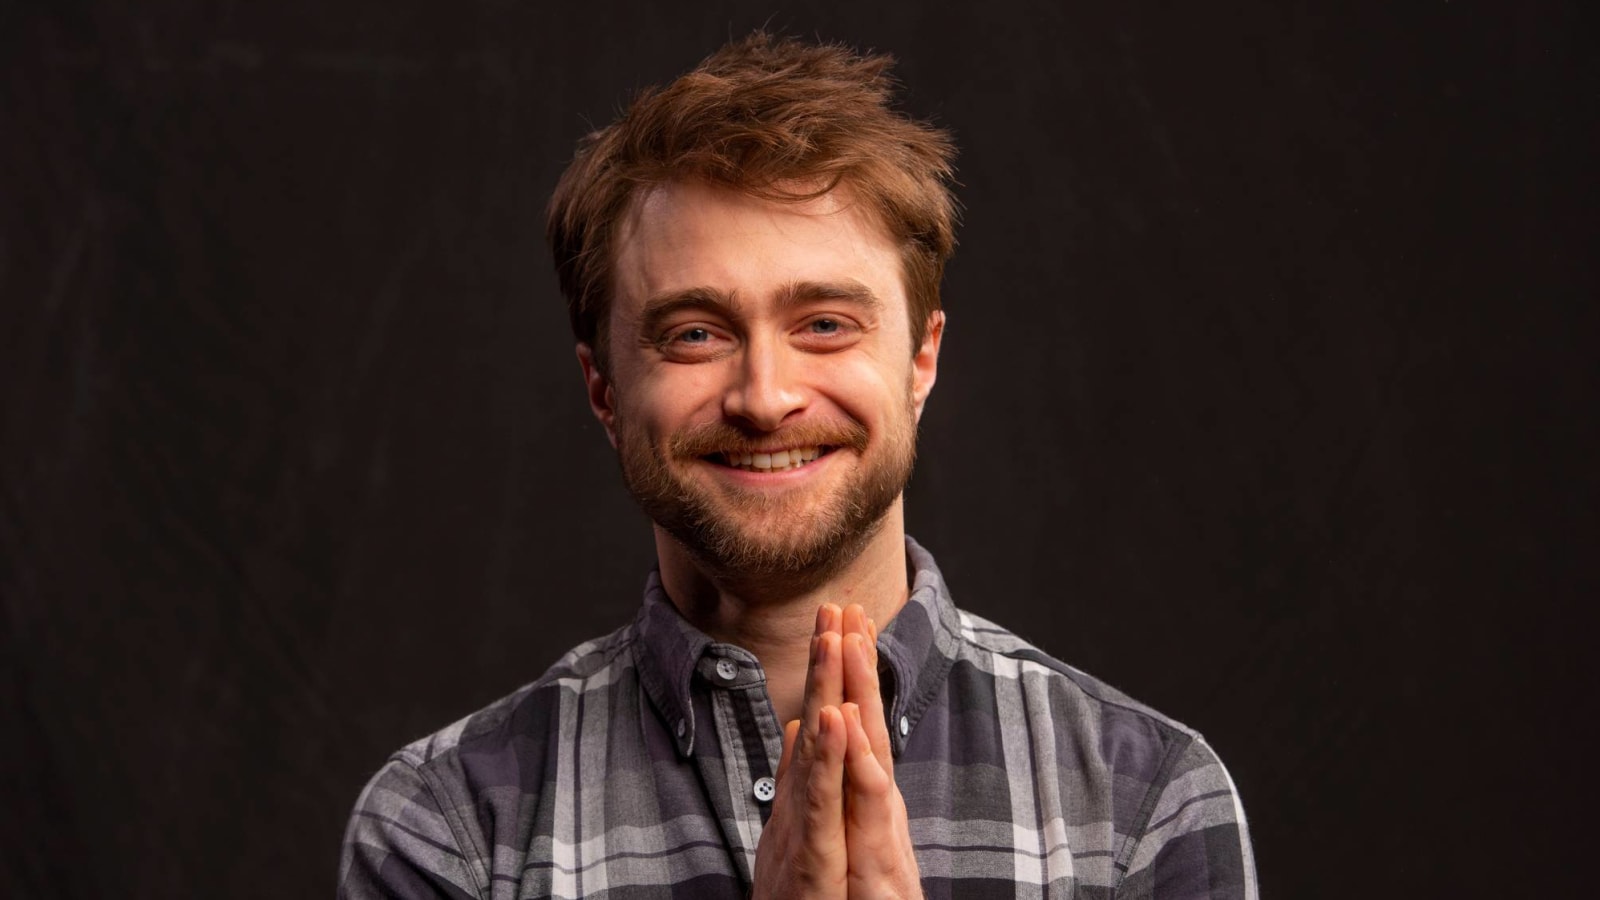 Radcliffe wrote love letter to 'Potter' costar Bonham Carter